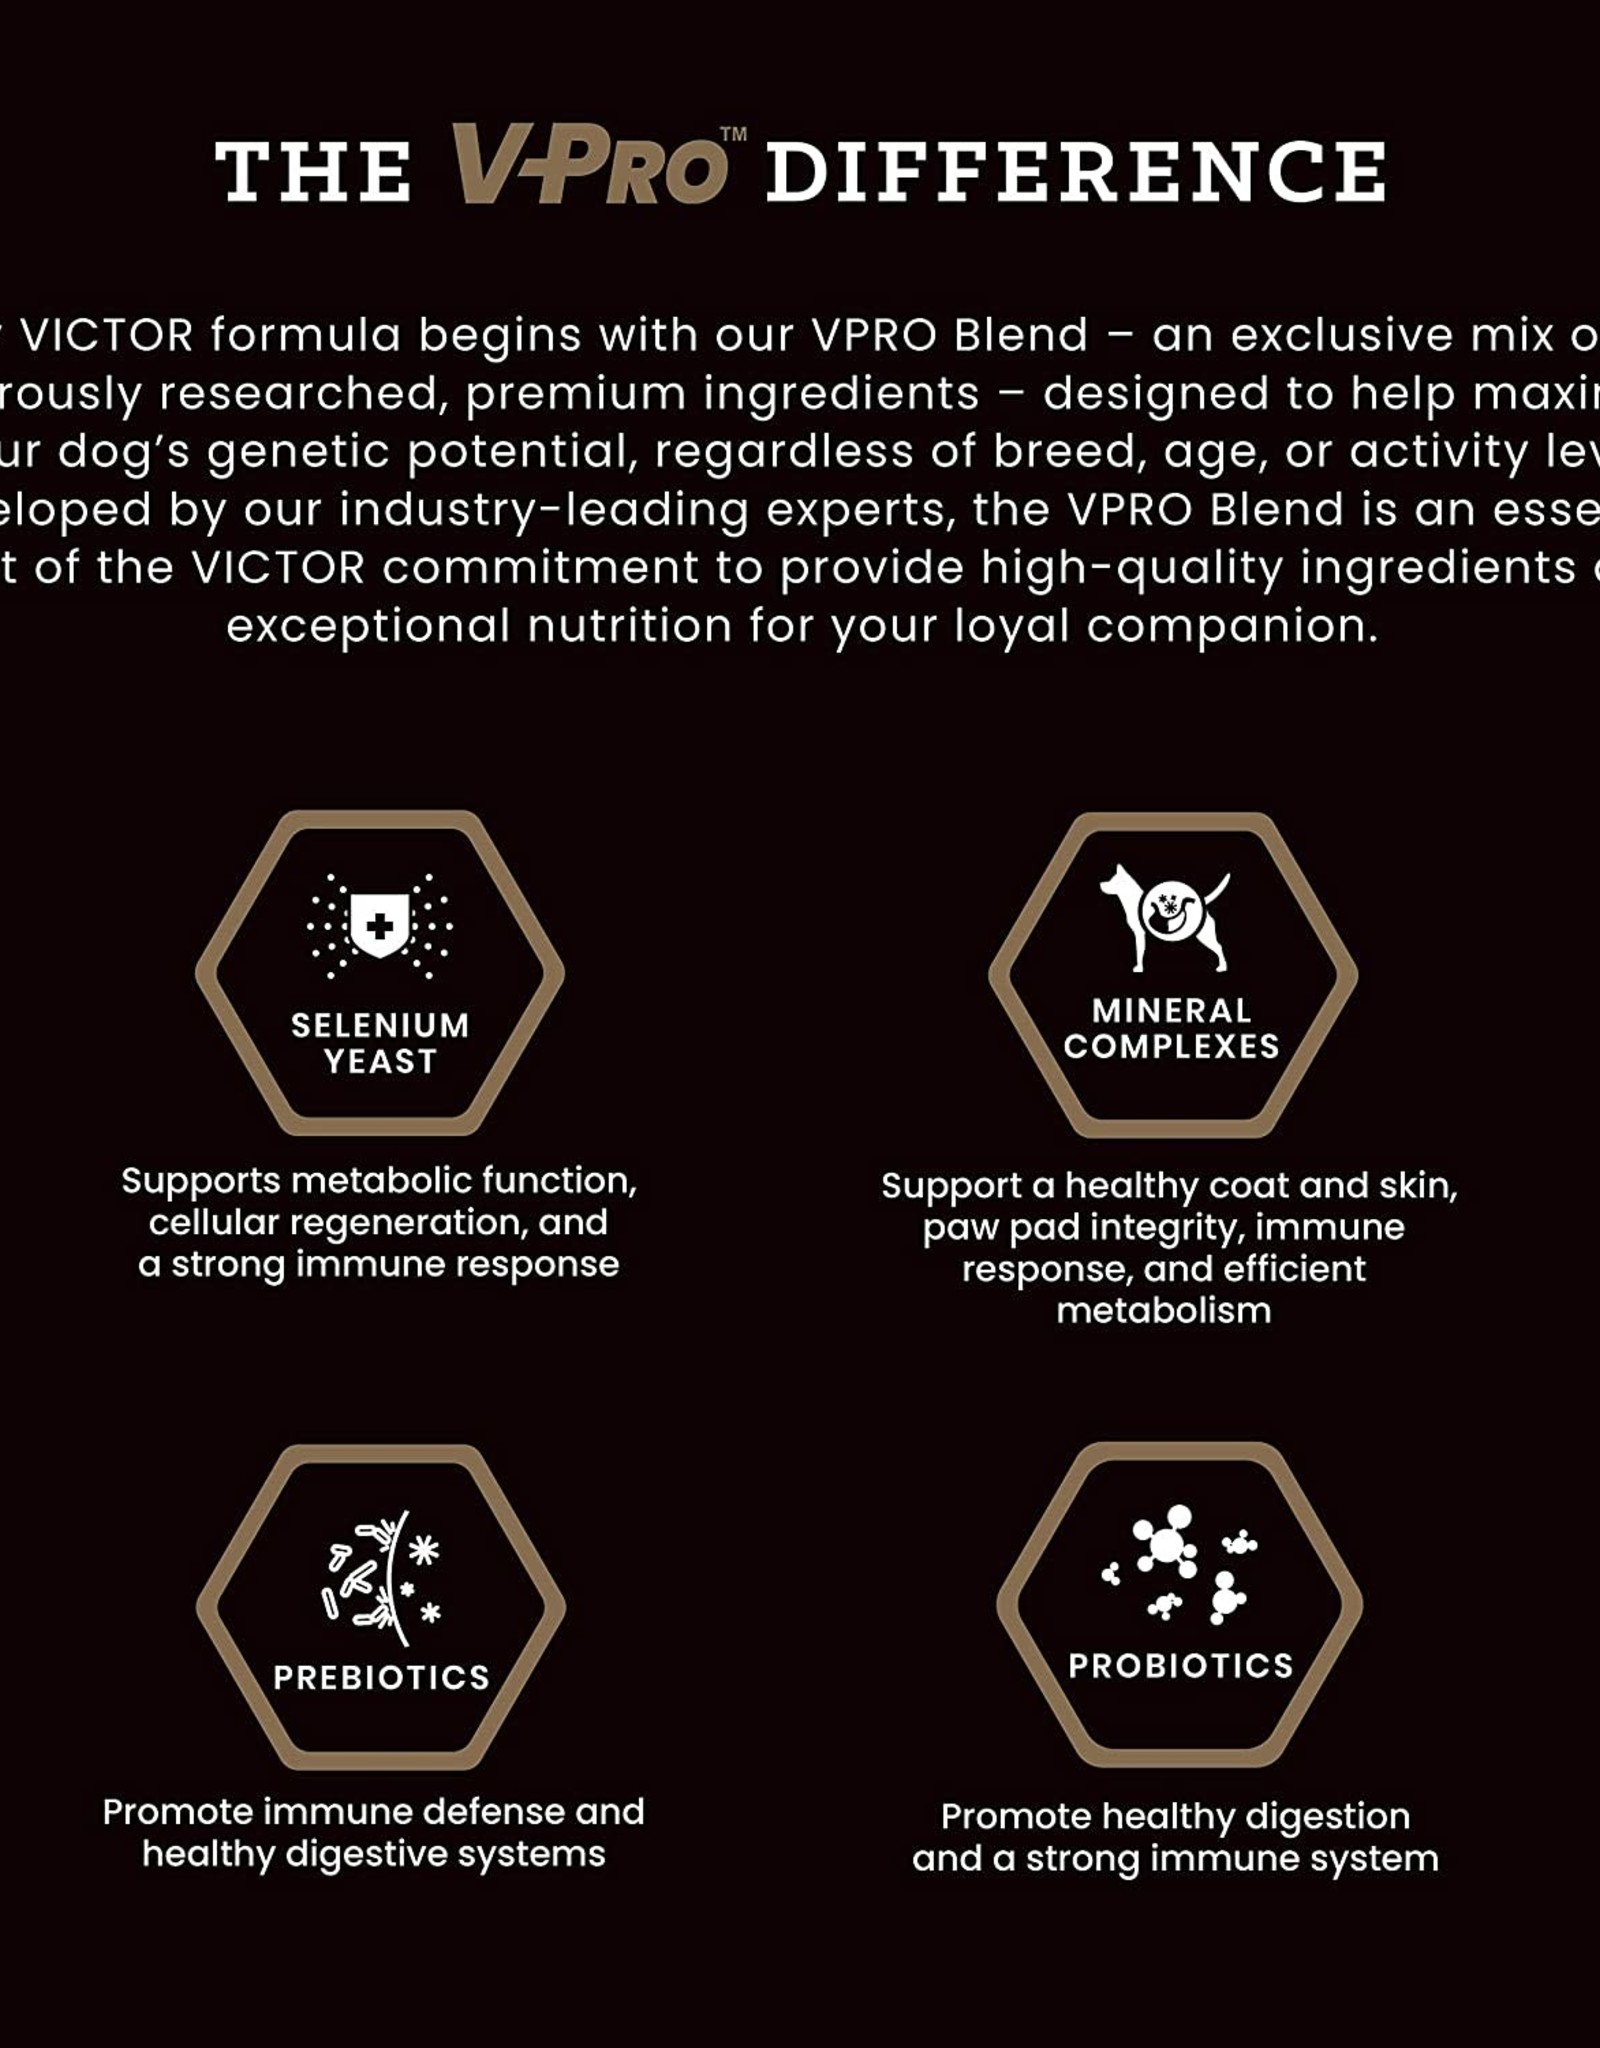 Victor Victor Dog Food Multi Pro 50lb